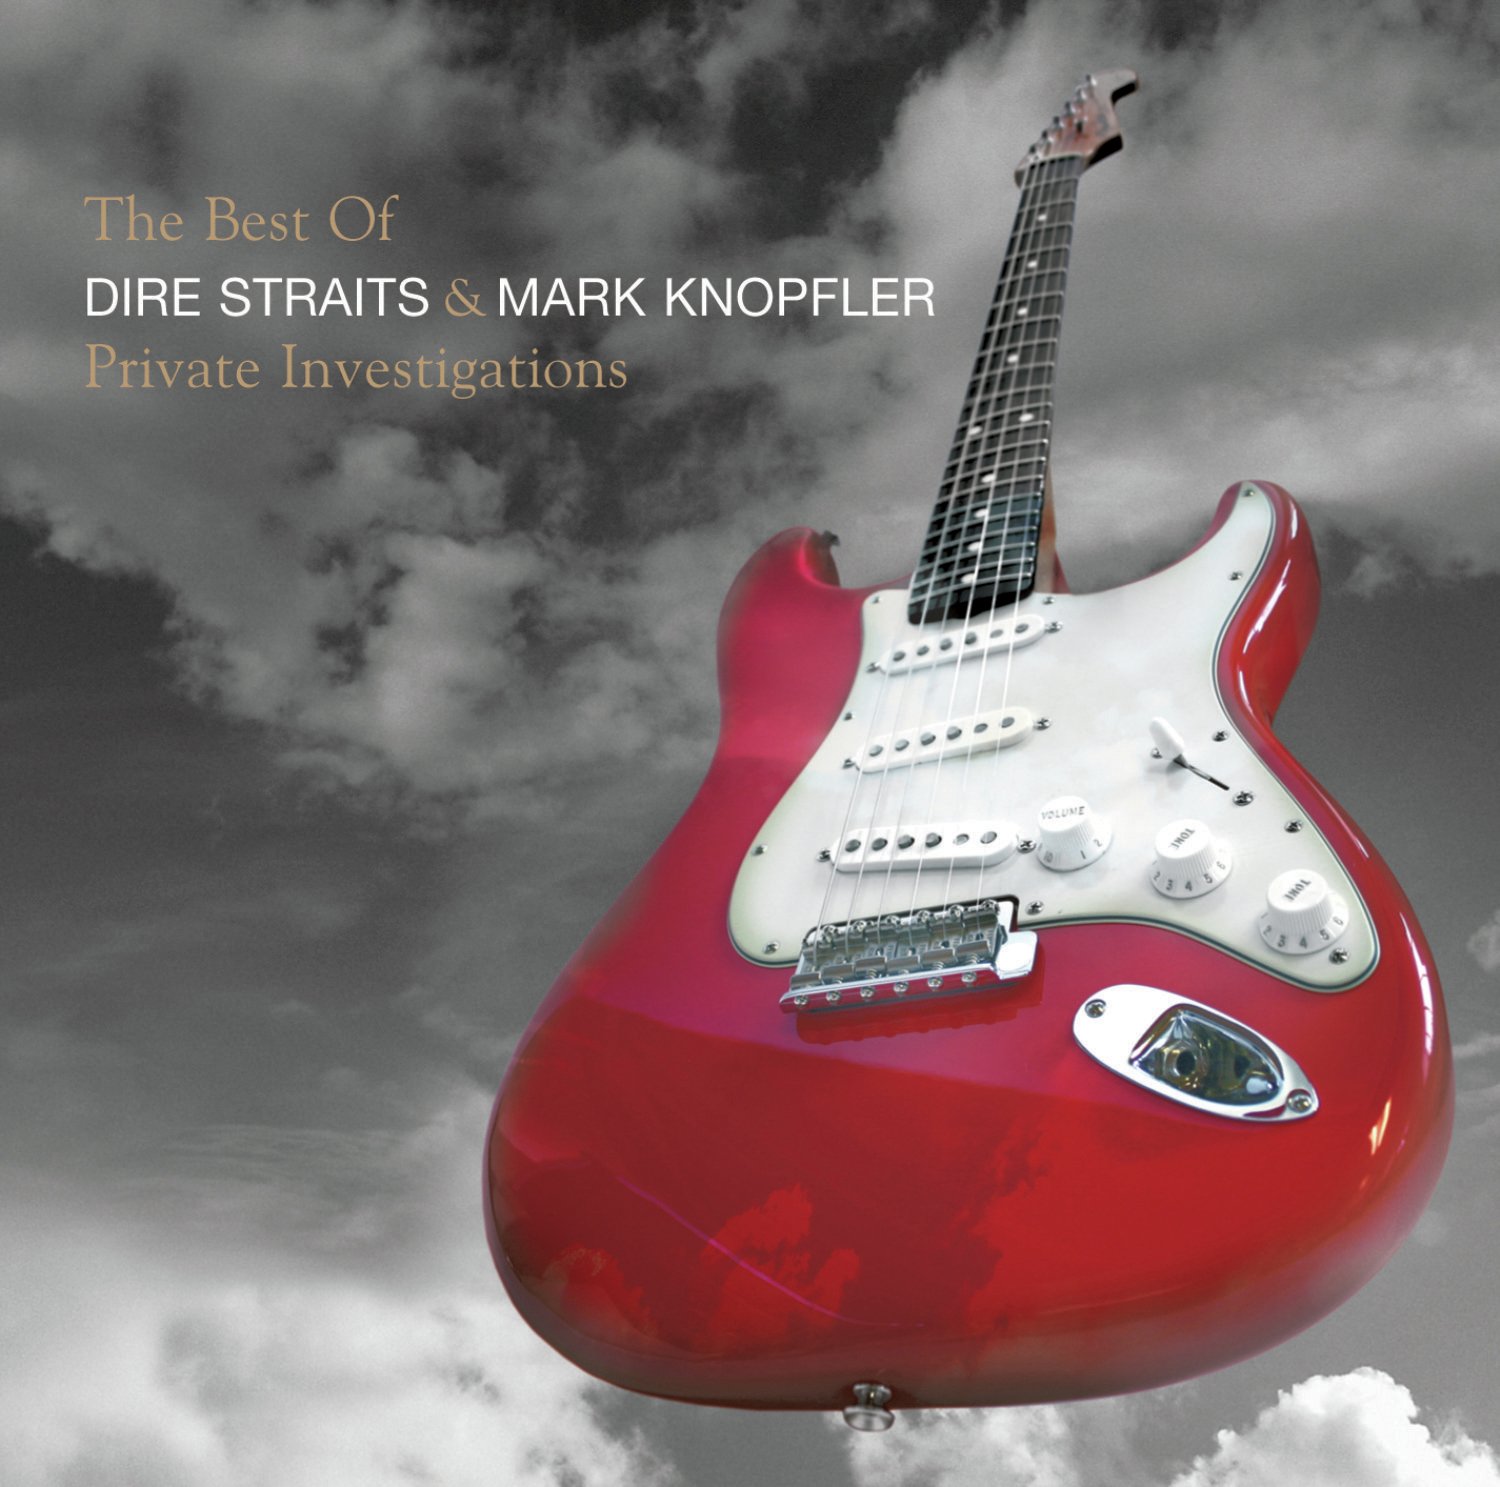 Dire Straits & Mark Knopfler Private Investigations Vinyl Review